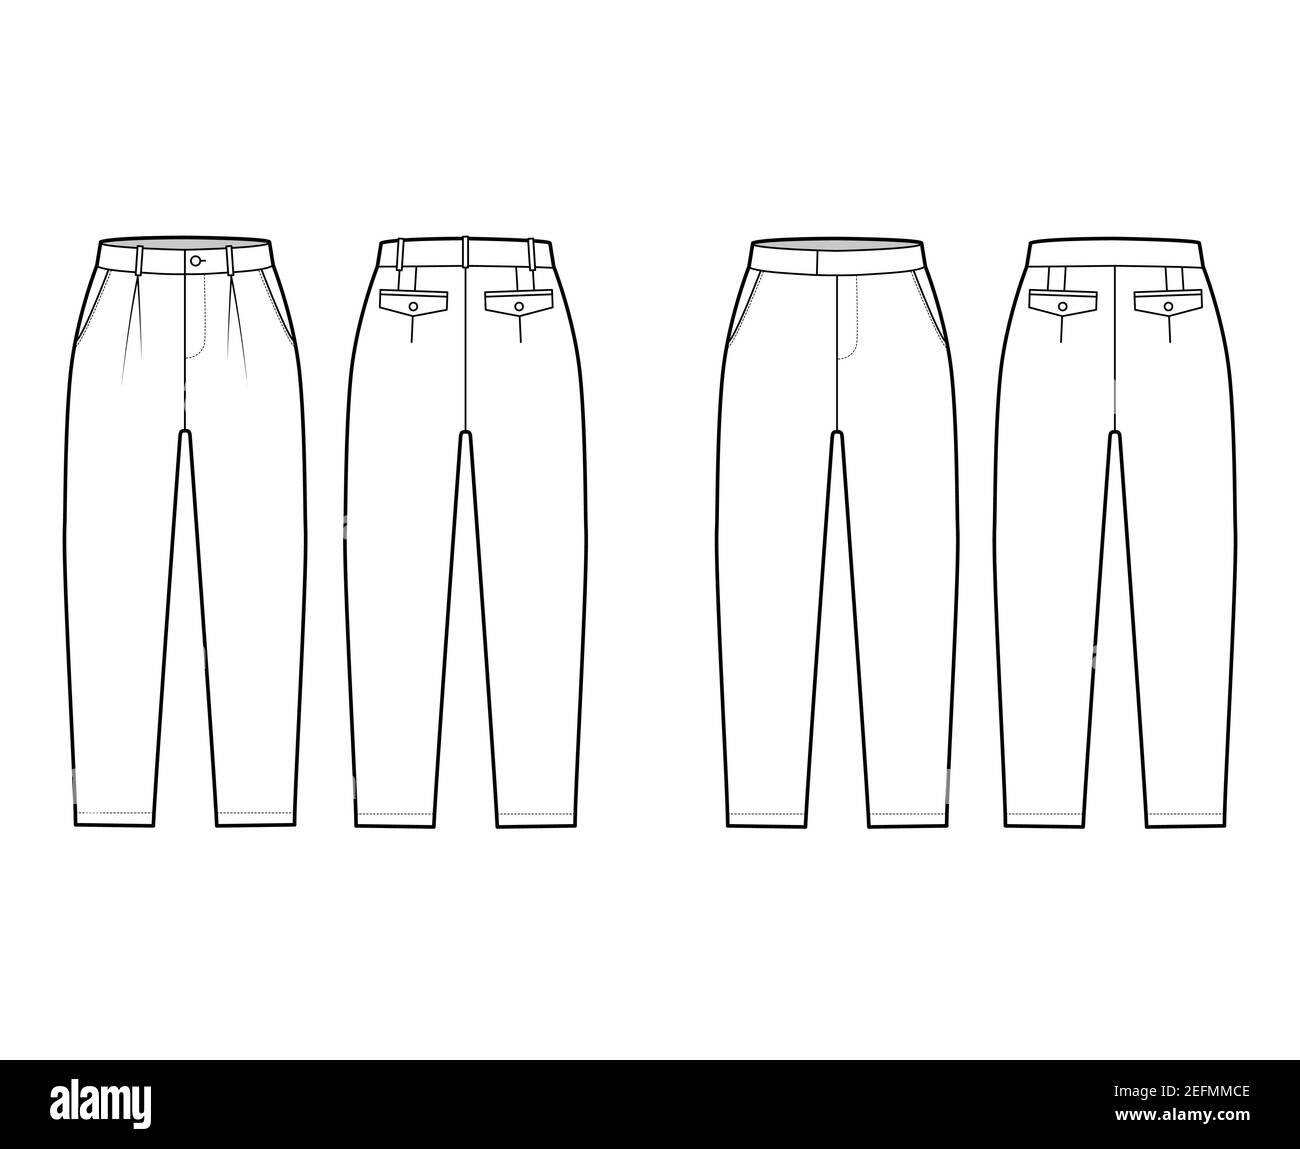 Set of Short capri pants technical fashion illustration with mid-calf ...